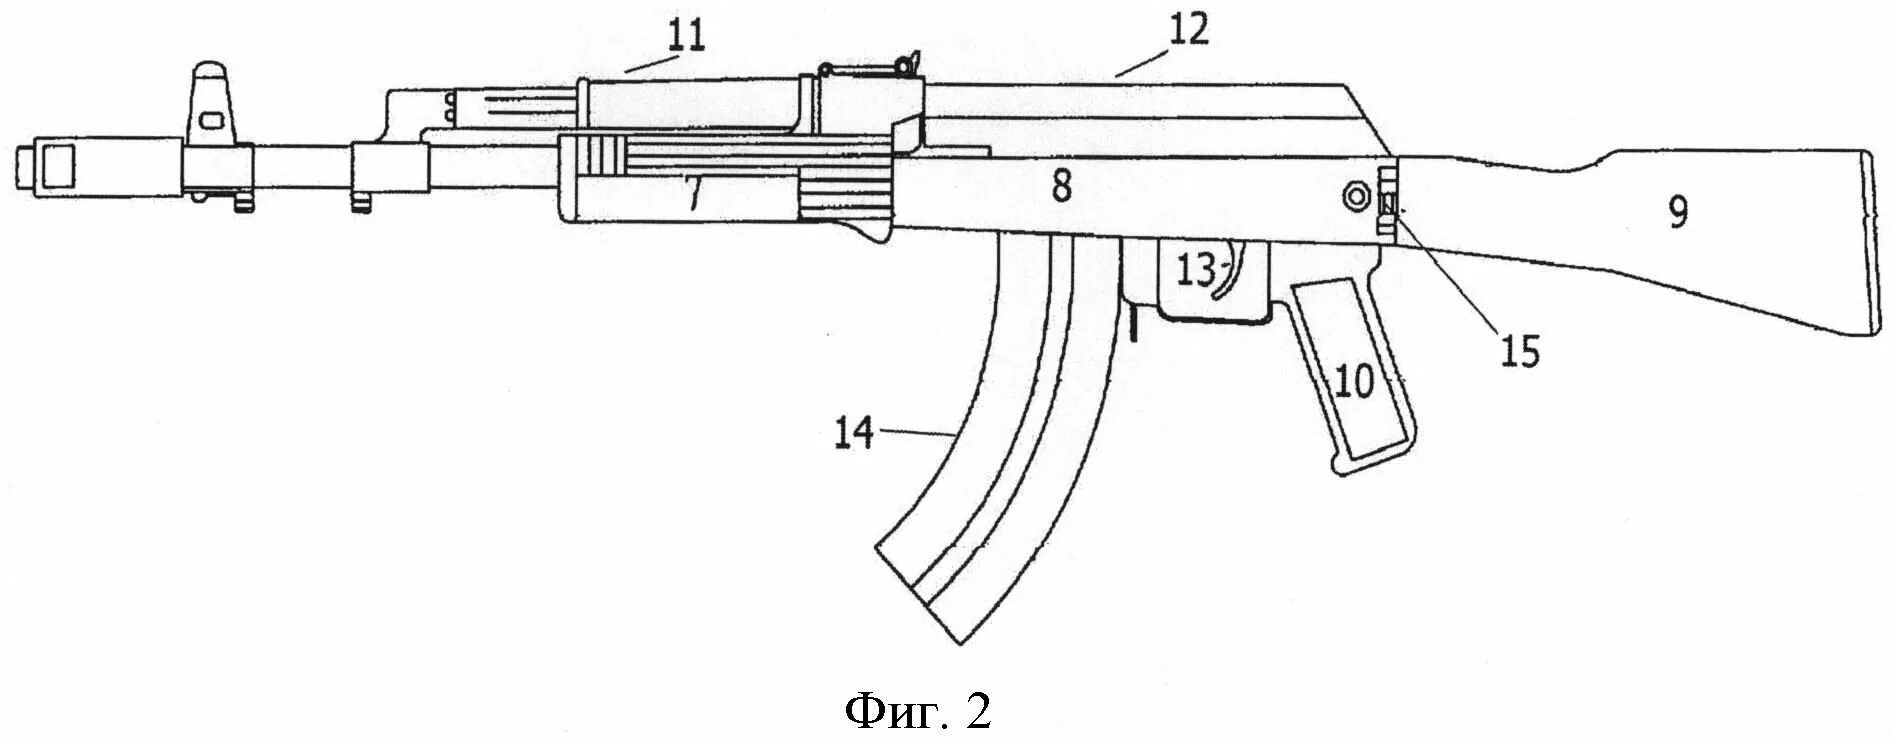 АК 47 сбоку чертёж. AK-103 автомат чертеж. Автомат Калашникова АК-74 чертеж. Чертеж АК 47 вид сверху и сбоку. Ак ису